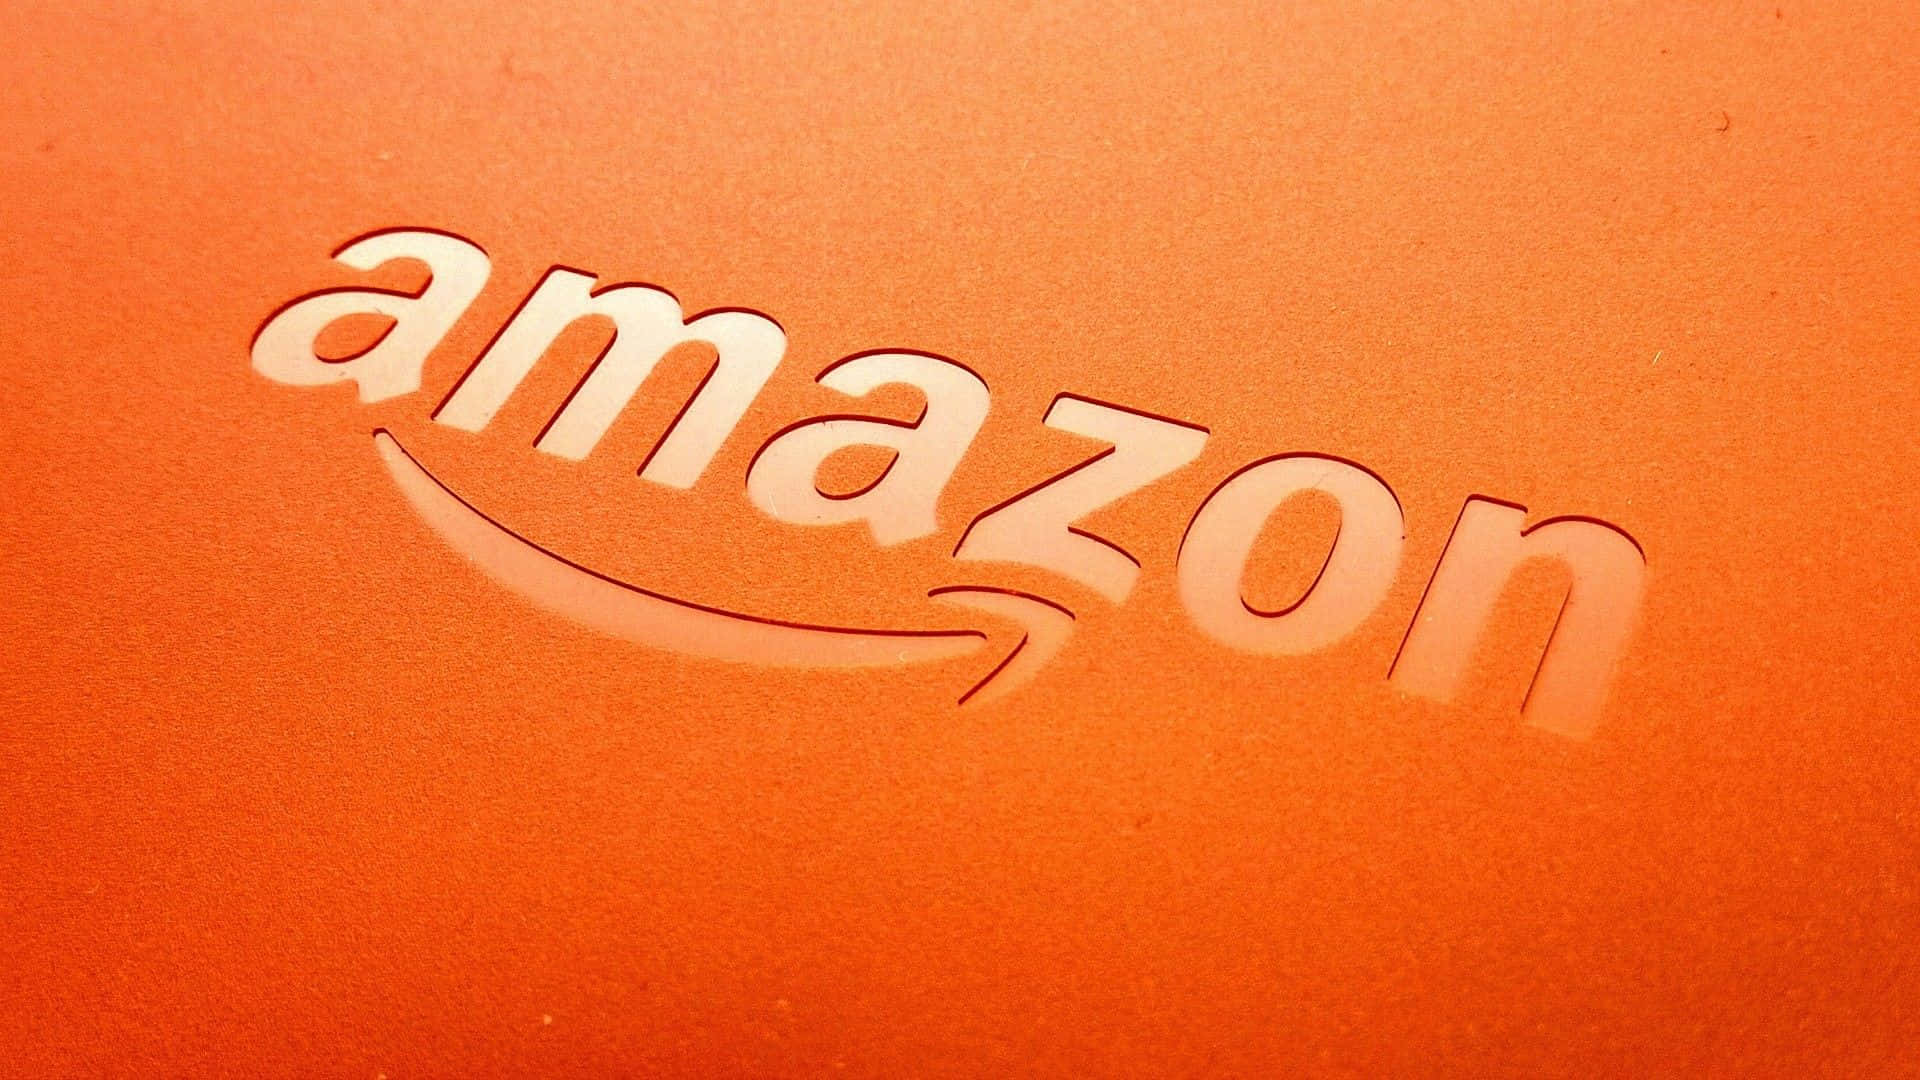 Vibrant Amazon UK Logo Against a Stunning Orange Backdrop Wallpaper